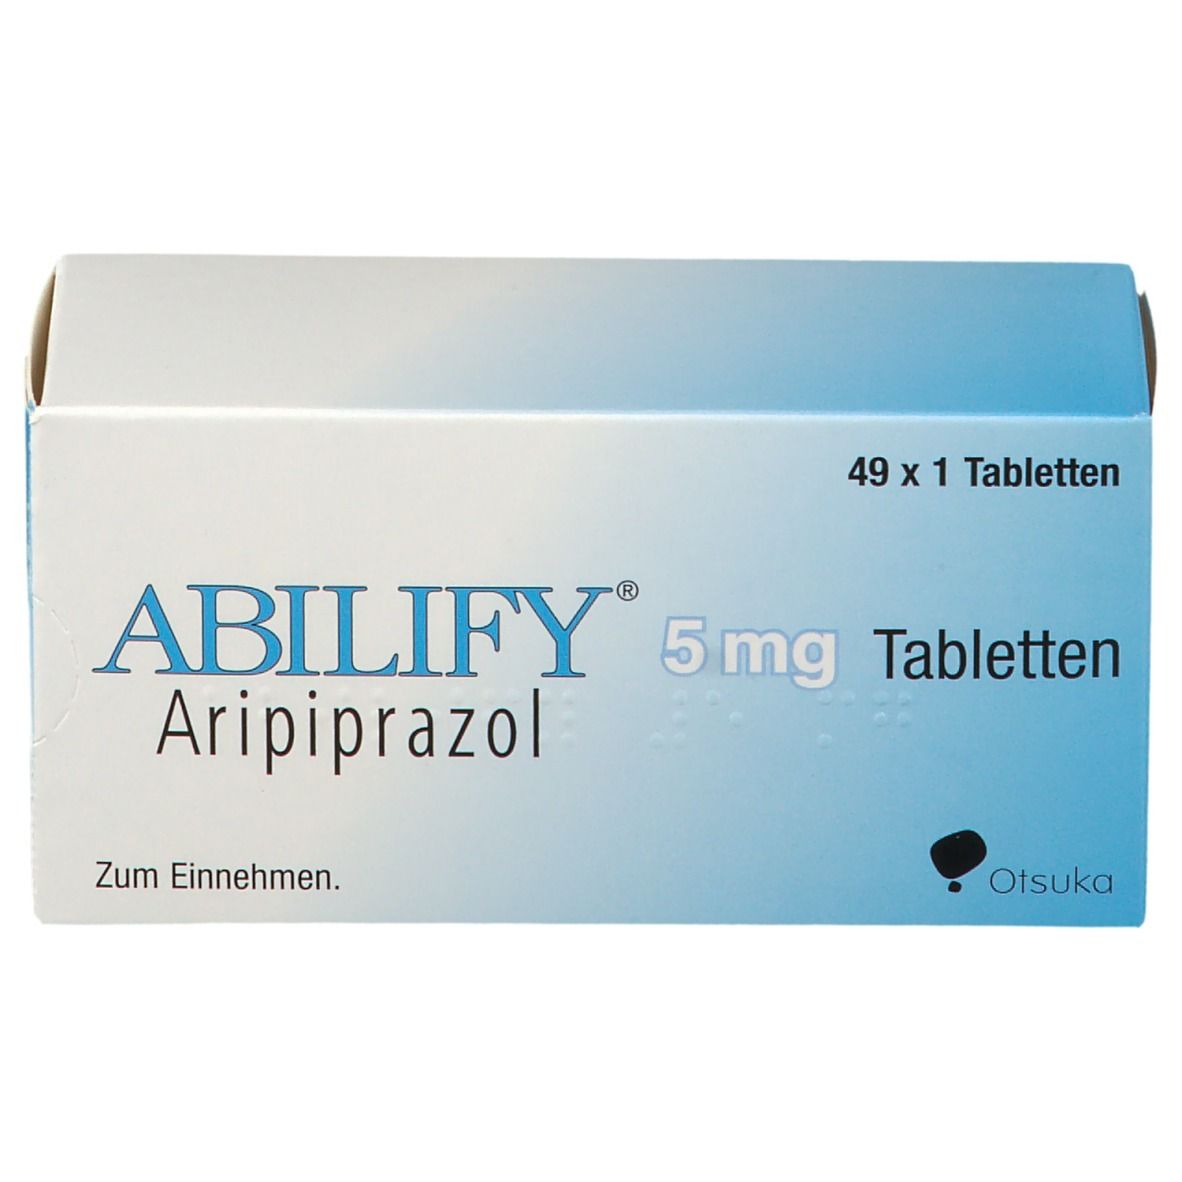 ABILIFY 5 mg Tabletten